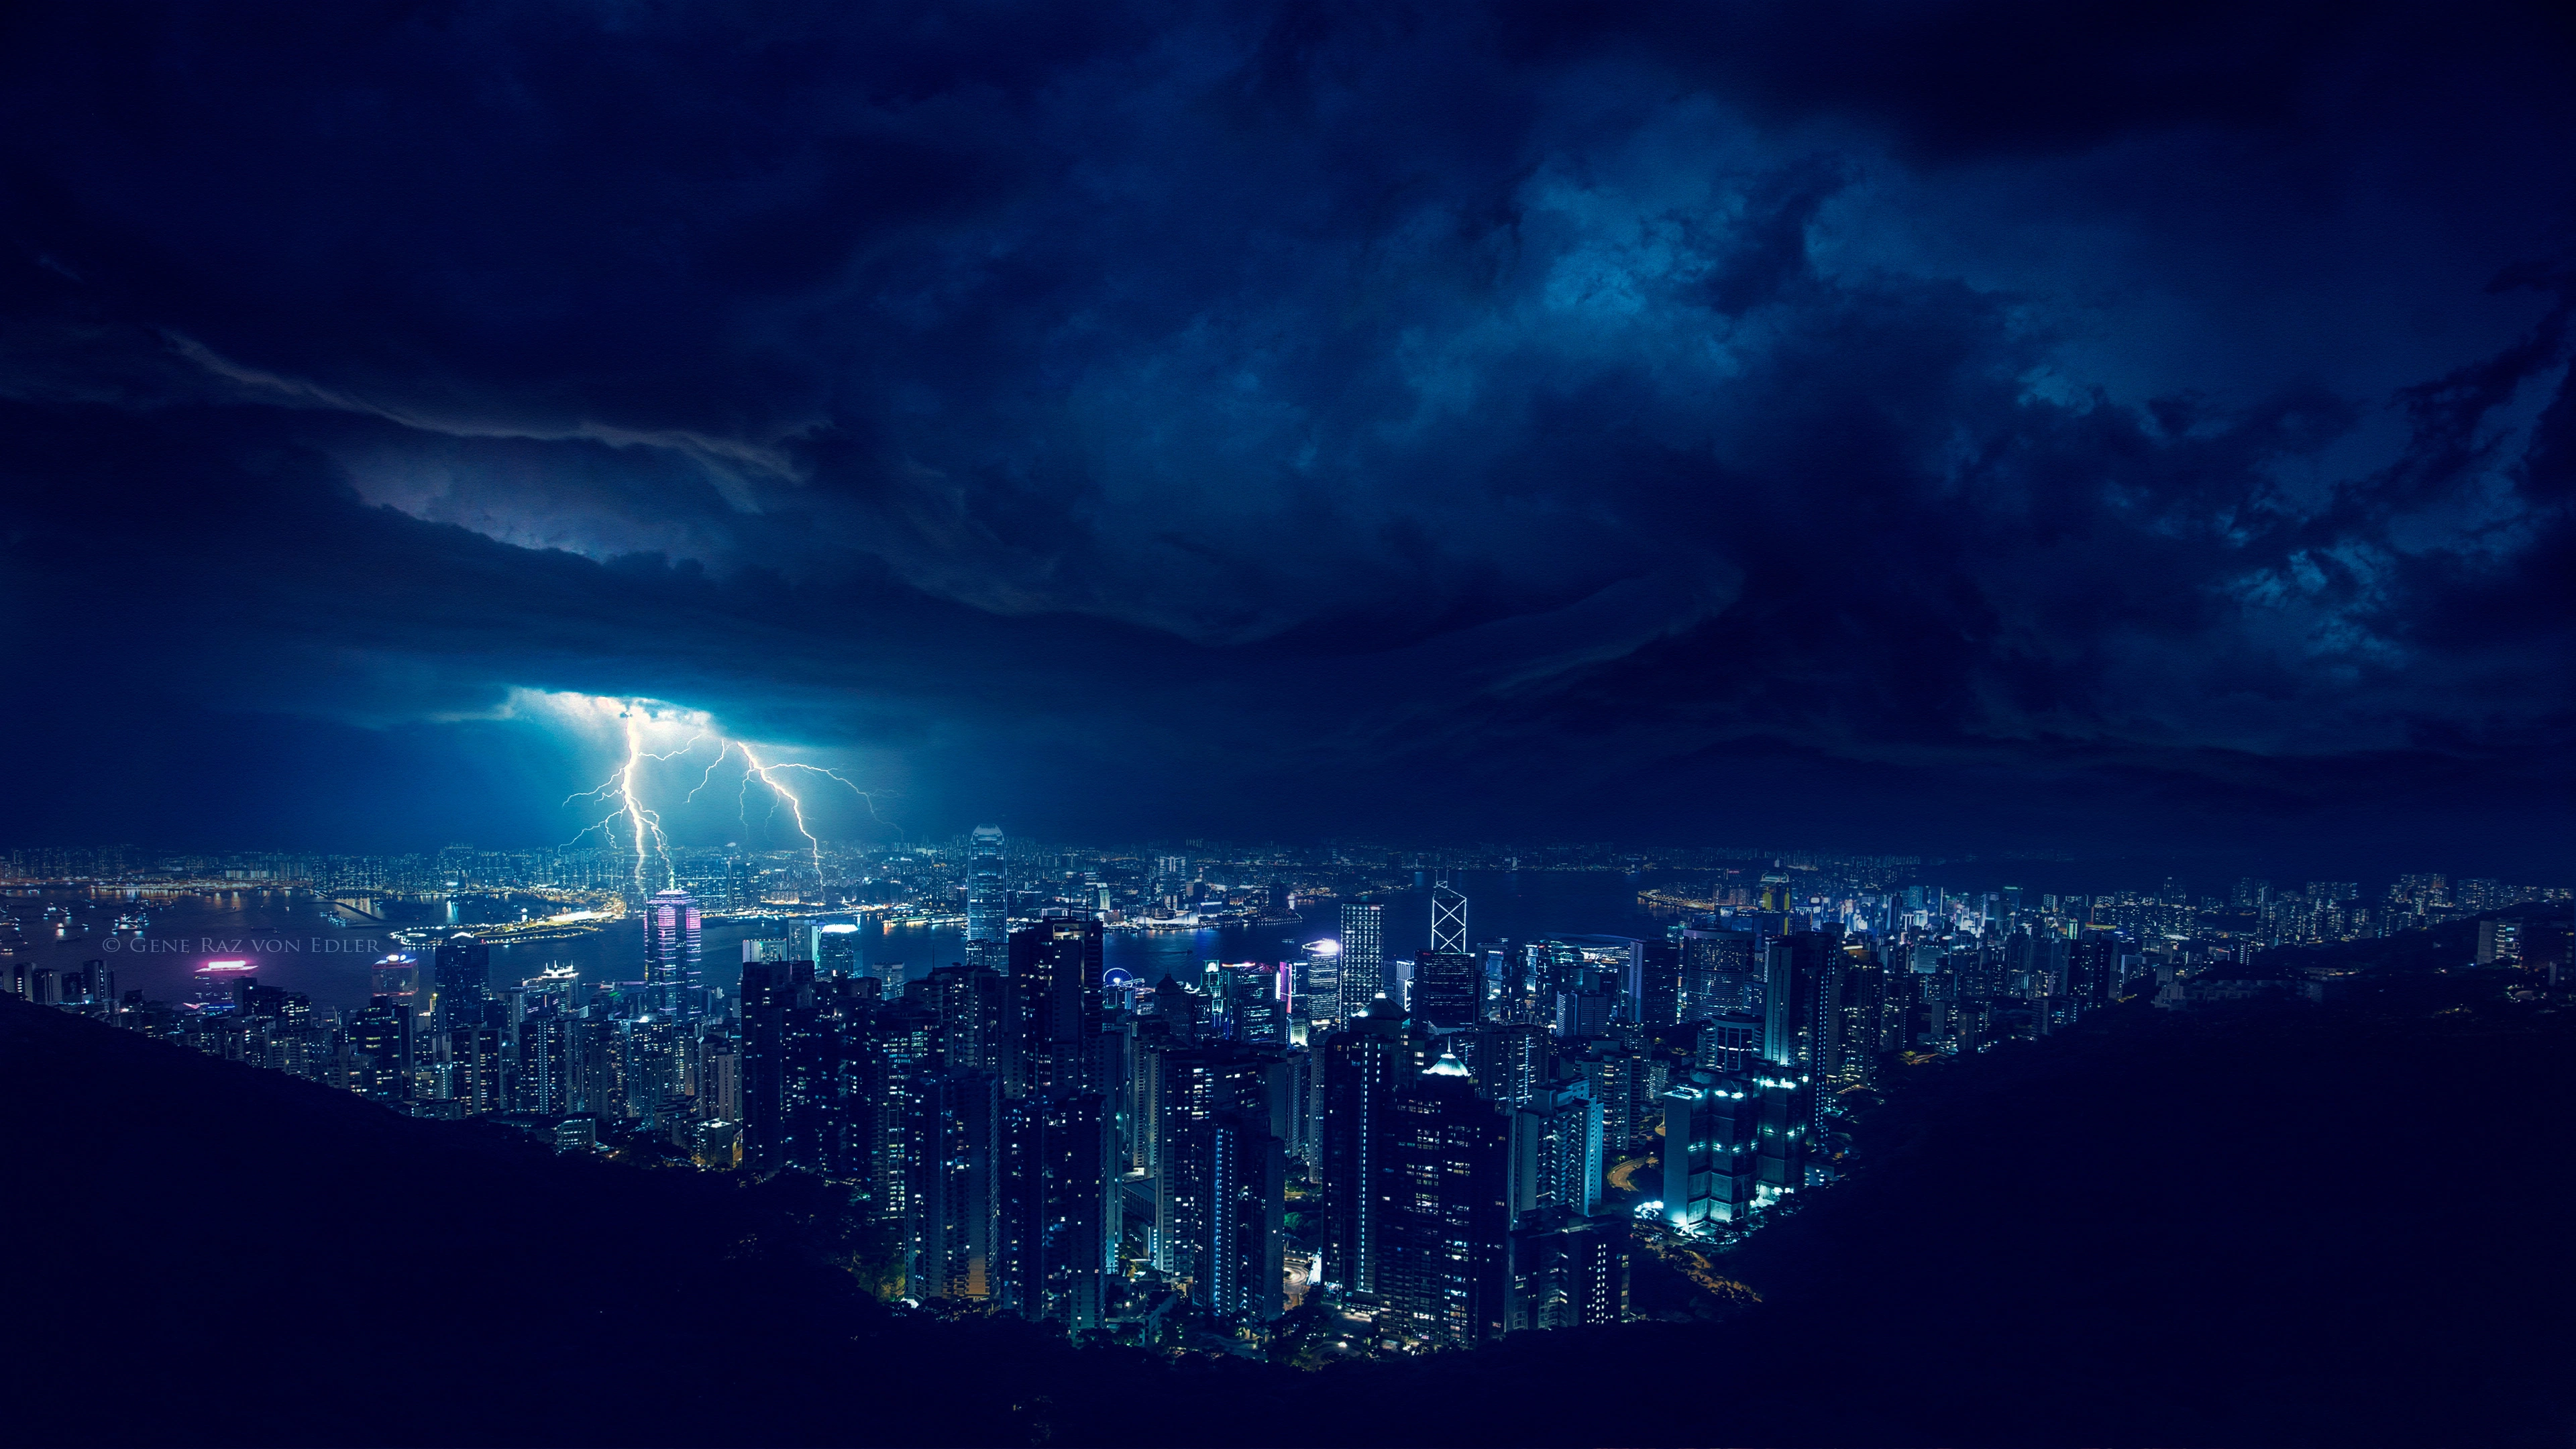 Storm Night Lightning In City 4k - 4k Wallpapers - 40.000+ ipad wallpapers  4k - 4k wallpaper Pc